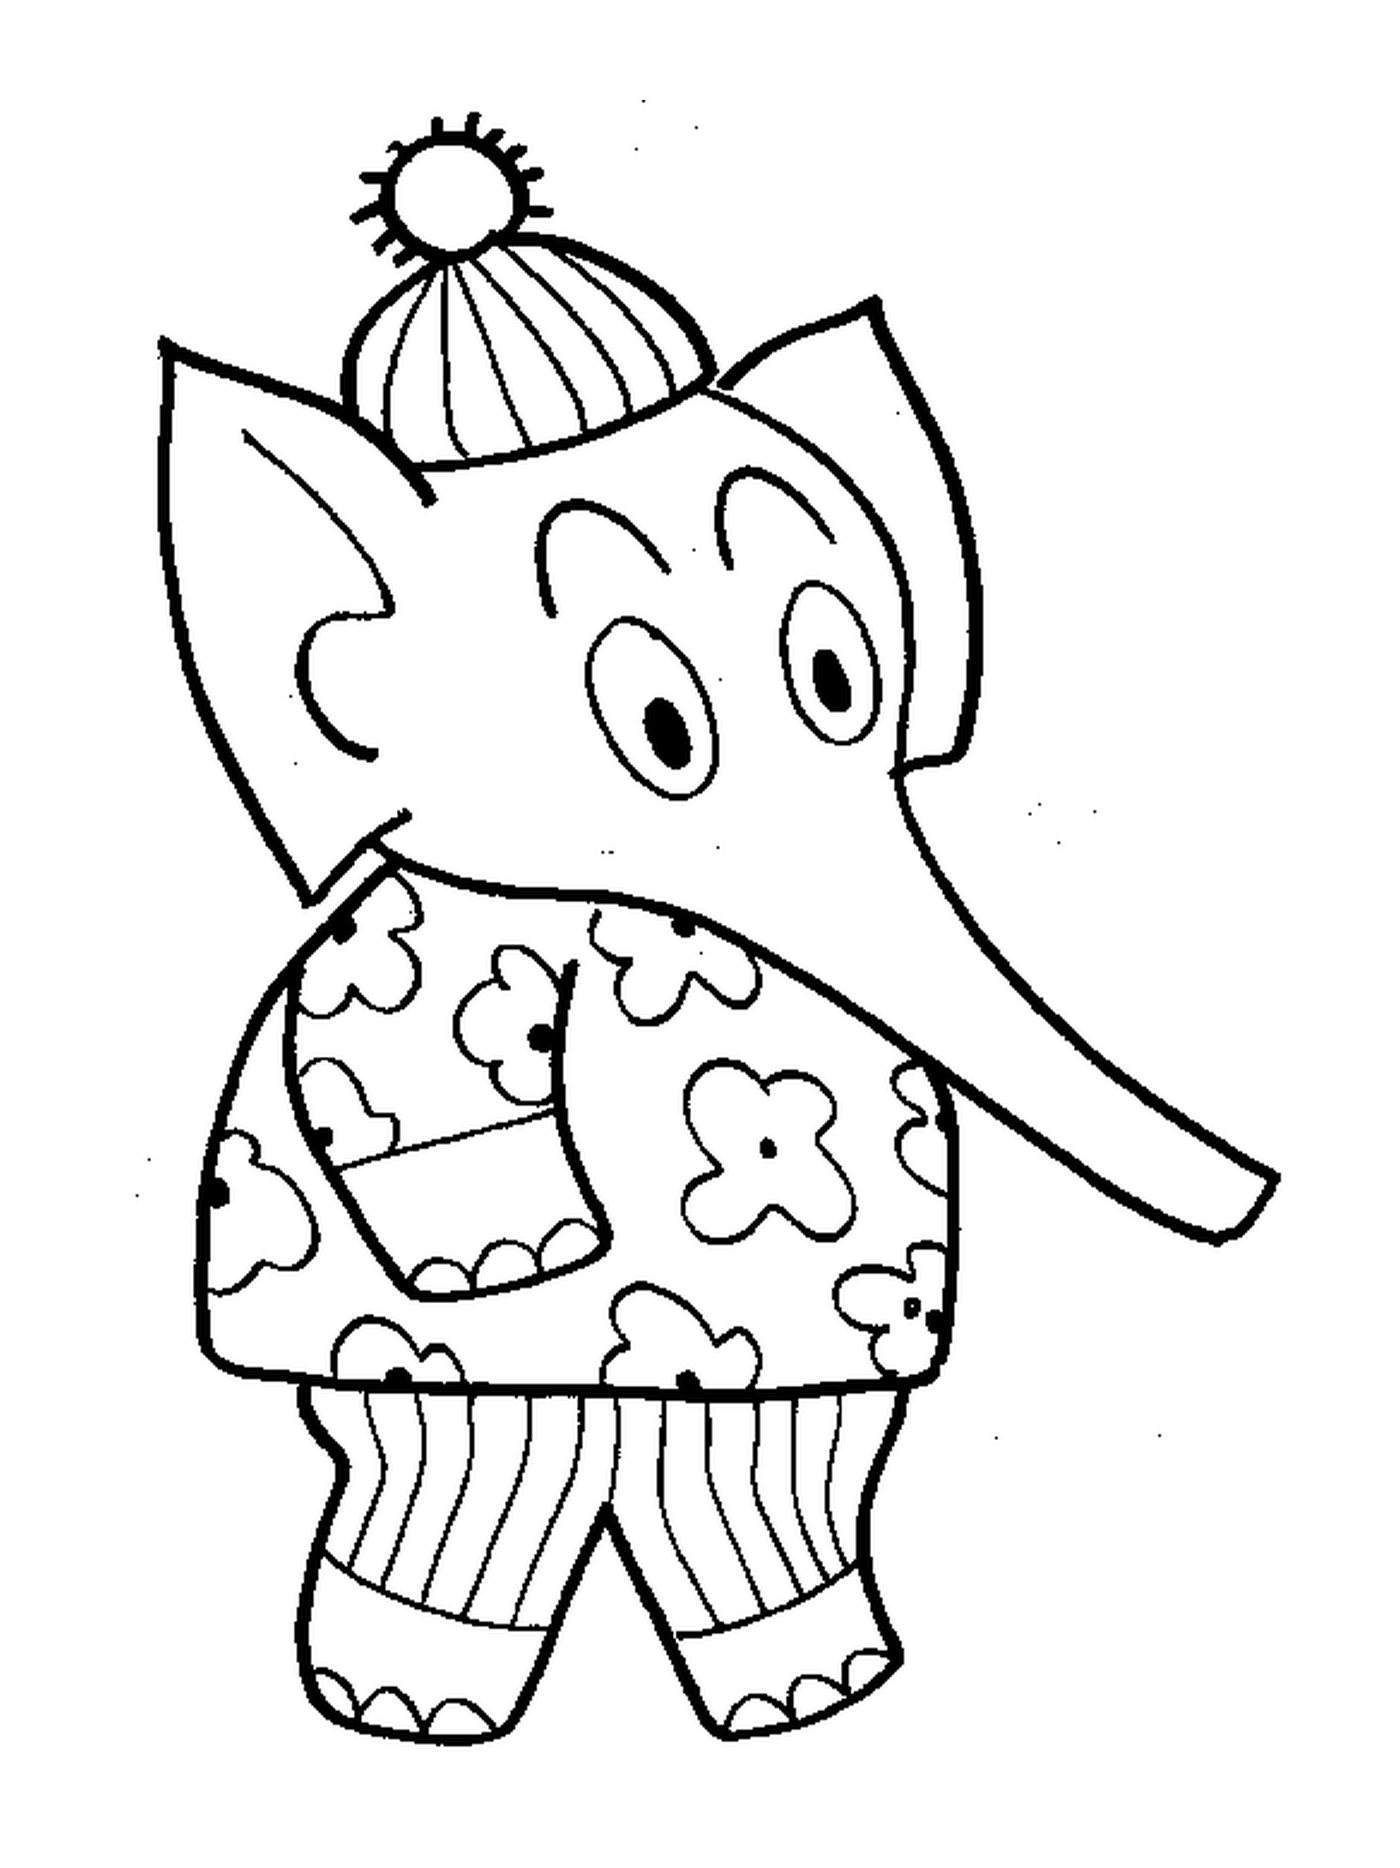  Un elefante con pijama 